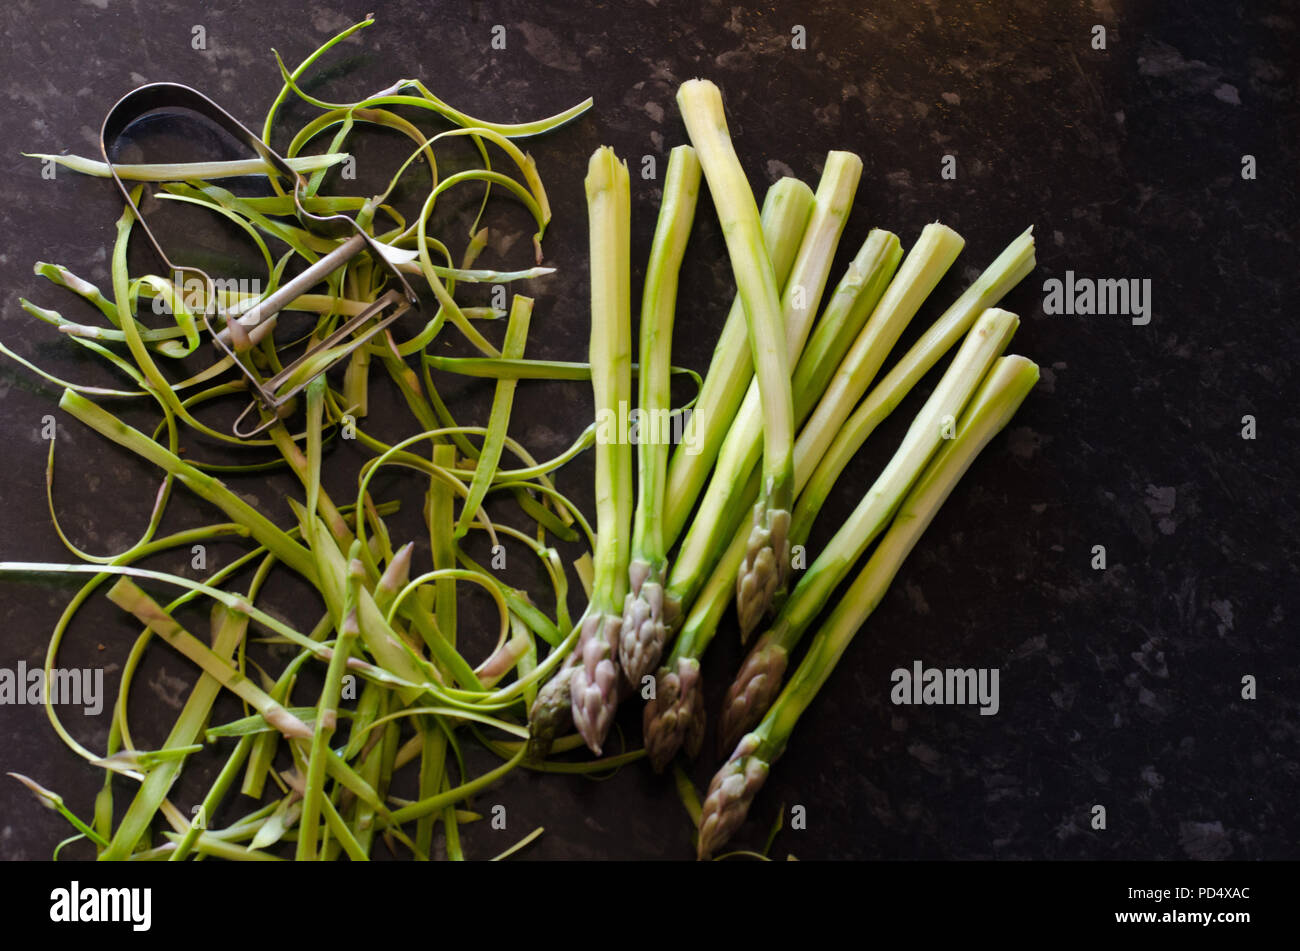 Peeled green asparagus on a dark background. Stock Photo